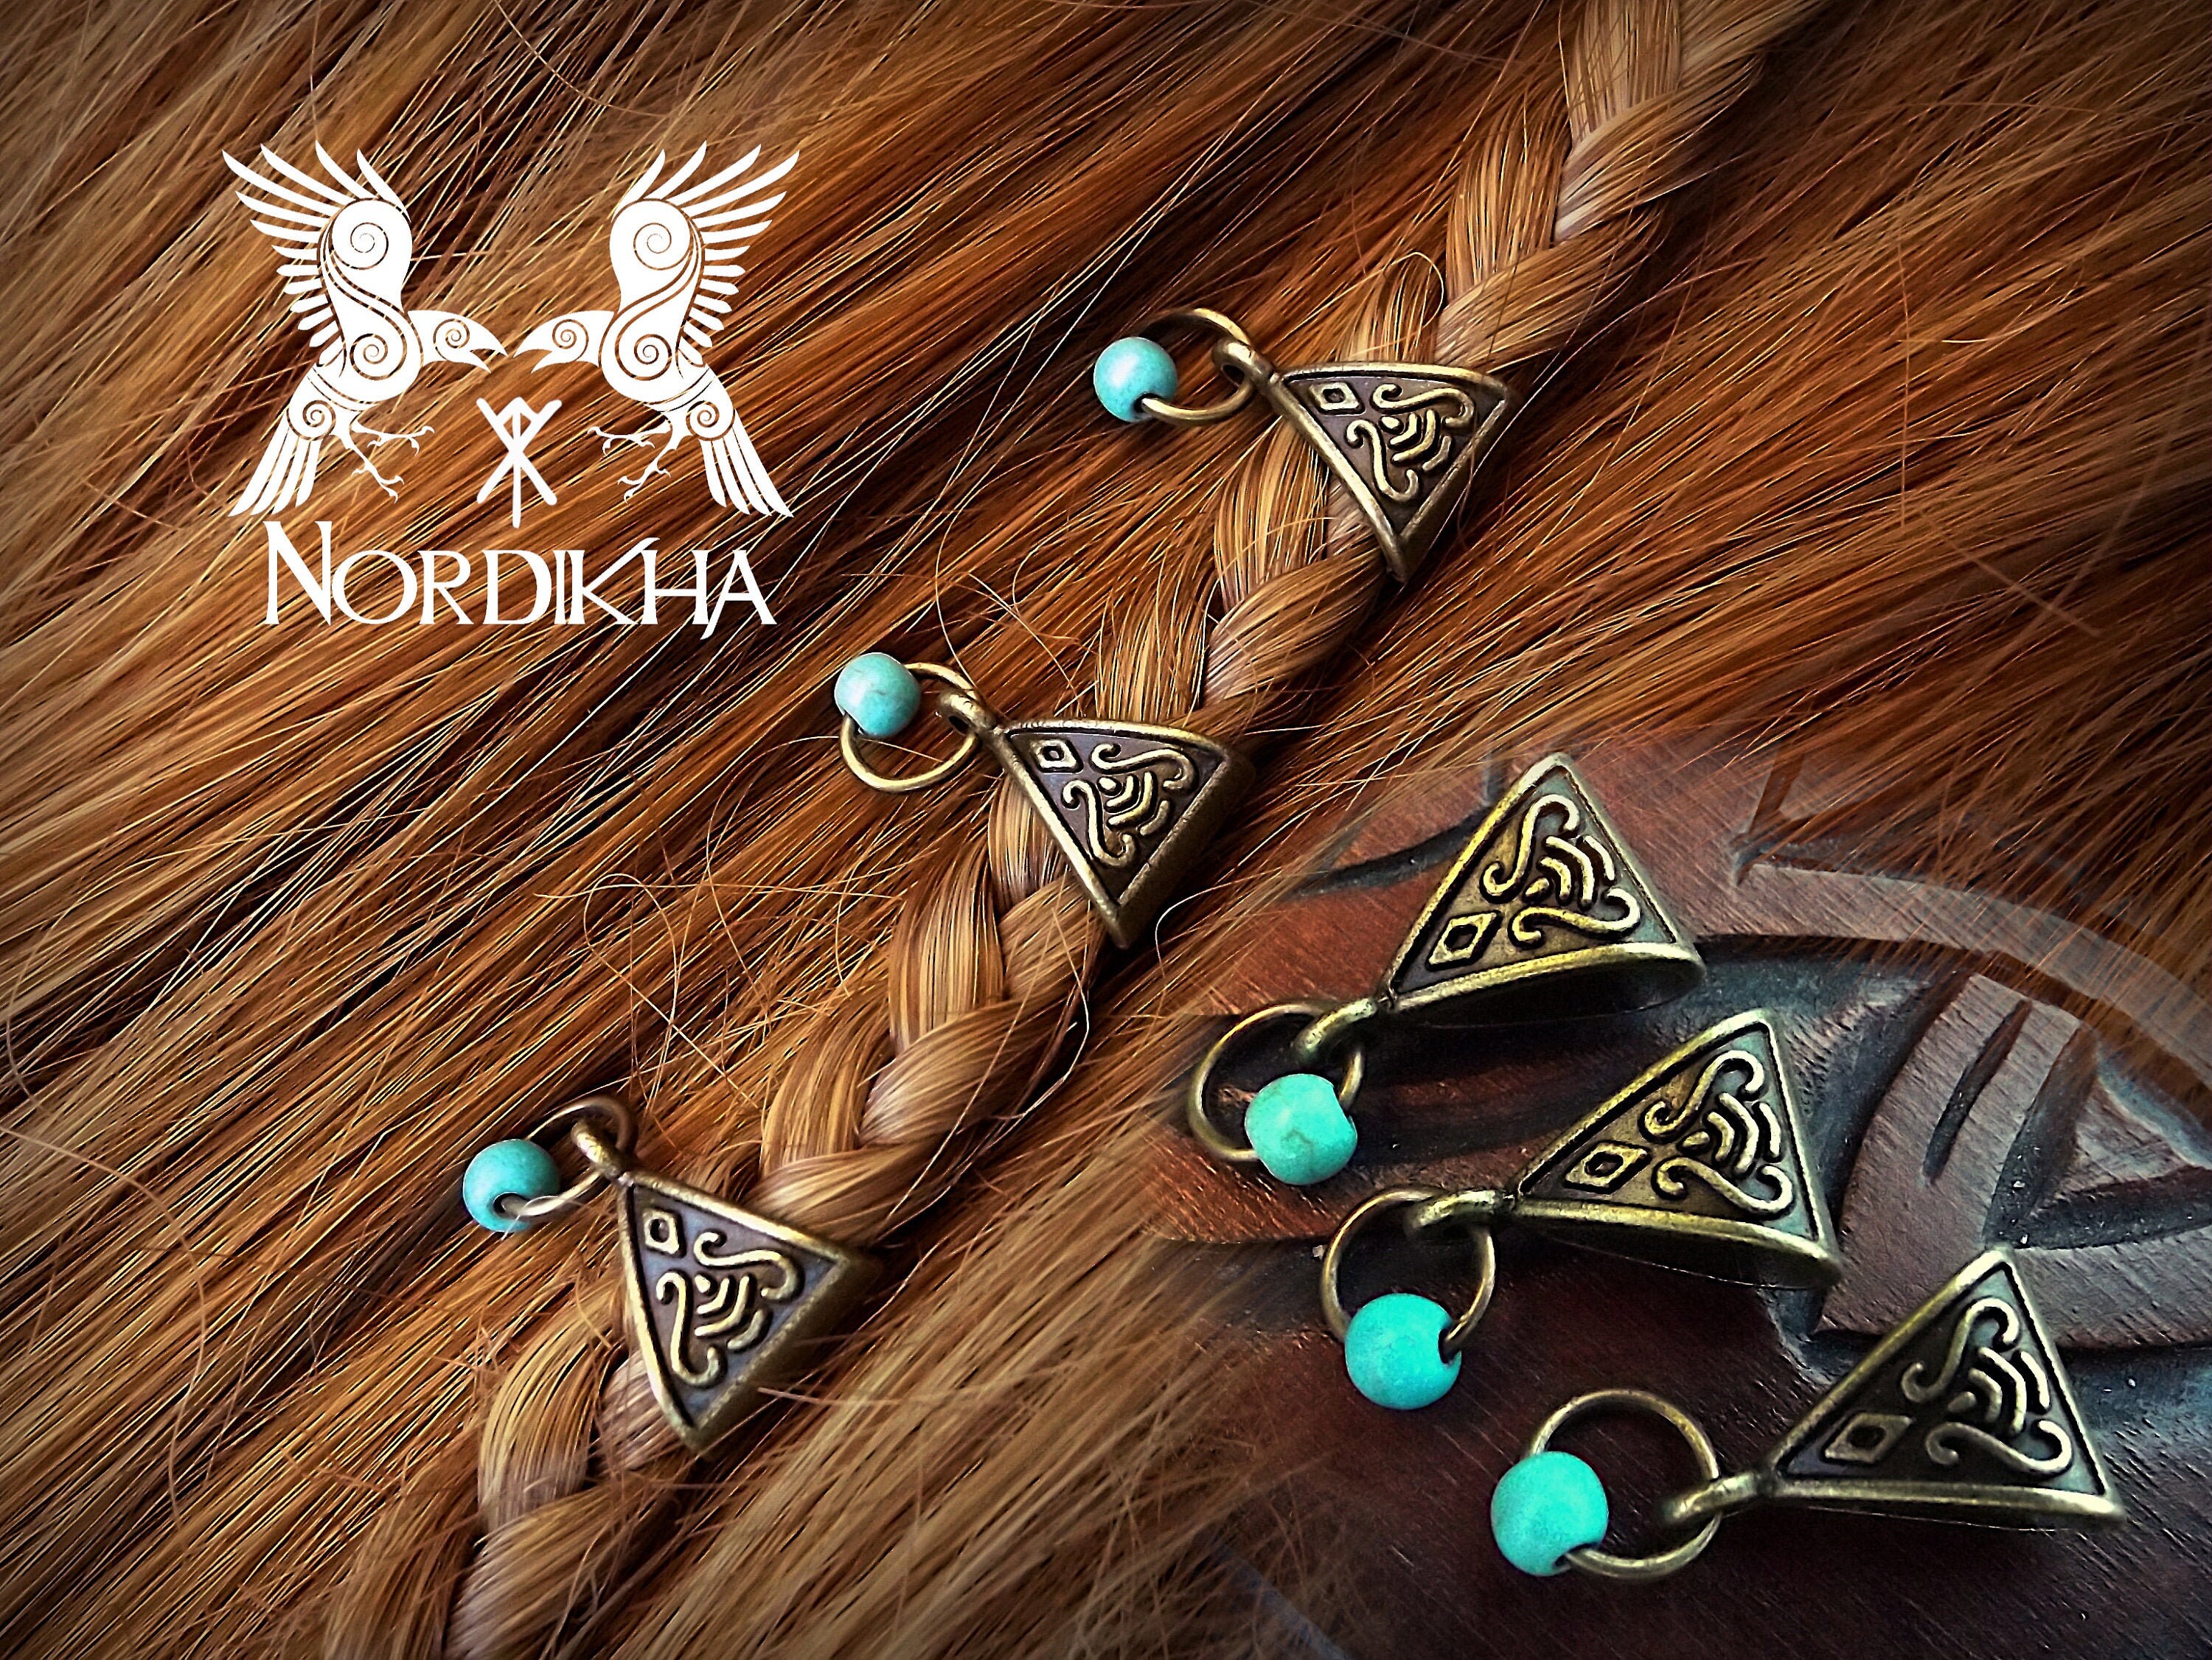 3 Viking Hair Beads lagertha Vikings, Turquoise and Cat's Eye Stones  Viking, Nordic Hair Jewelry, Braid Beads -  Israel